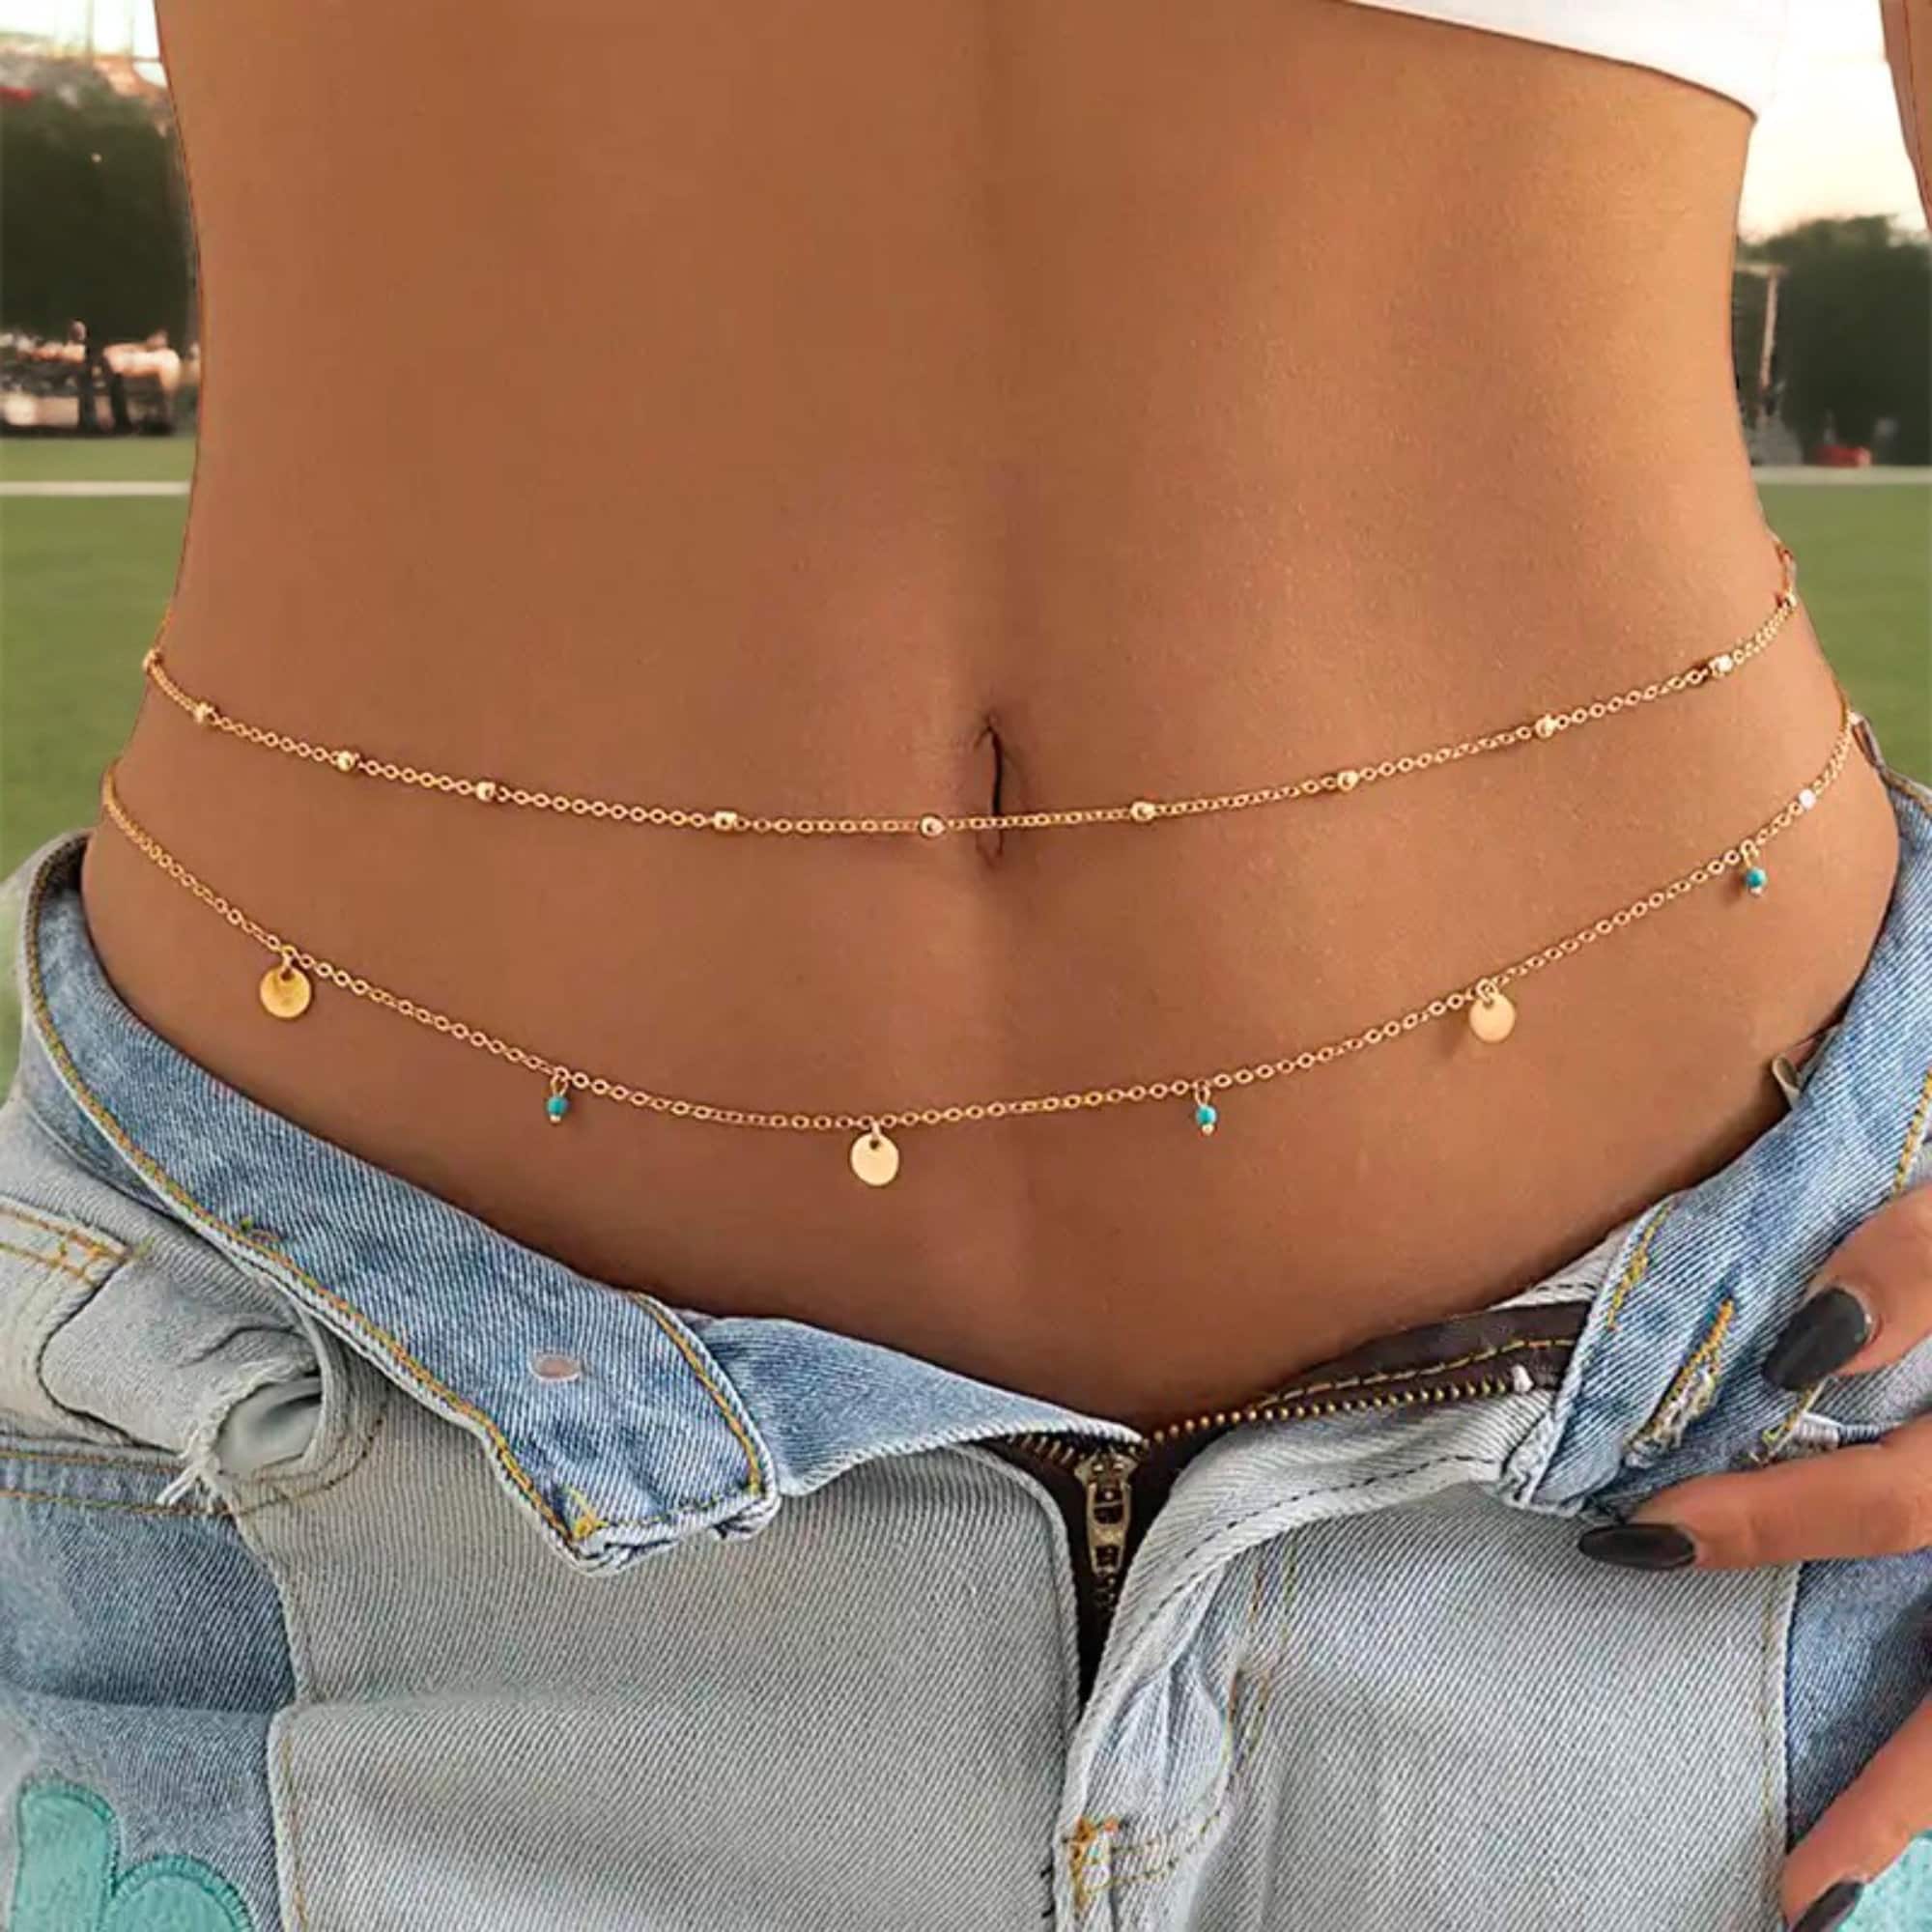 Kakaco Rhinestone Gold Body Chain Harness Crystal Bra Chains Beach Bikini  Body Accessories Jewelry for Women and Girls